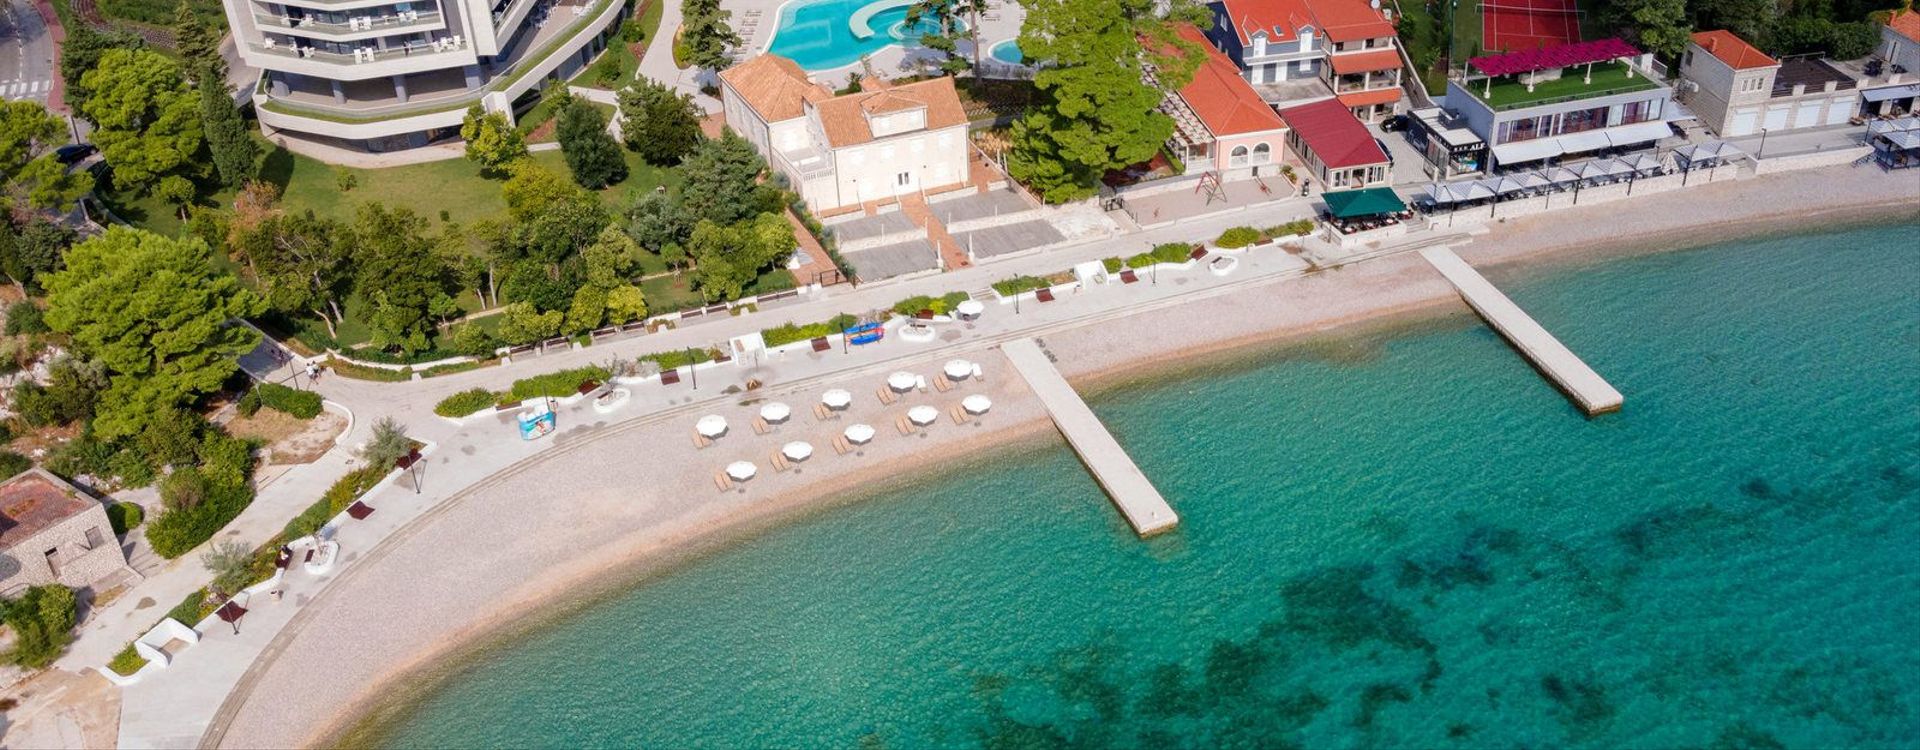 Sheraton Dubrovnik Riviera Hotel-Location shots.jpg